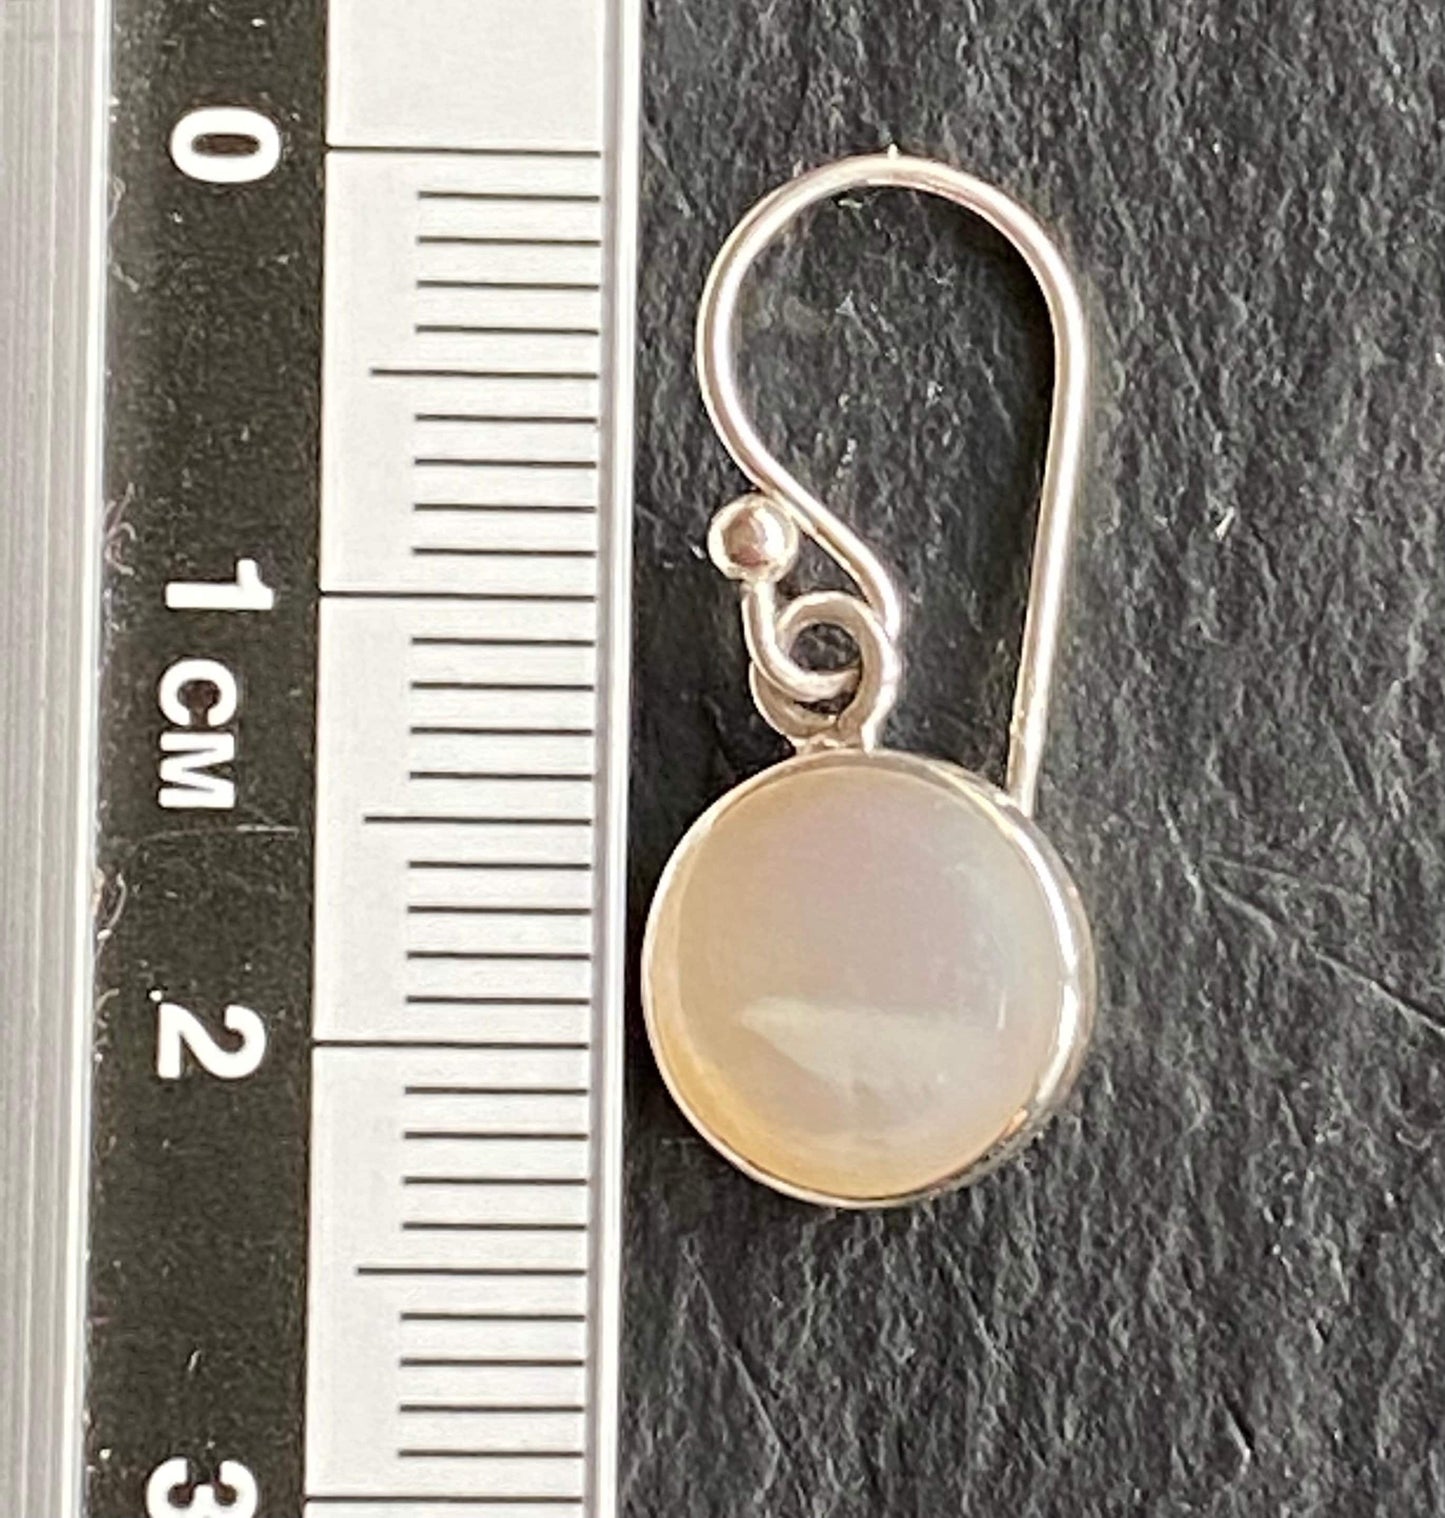 Nacre round earrings Sterling Silver 925 - TSE069